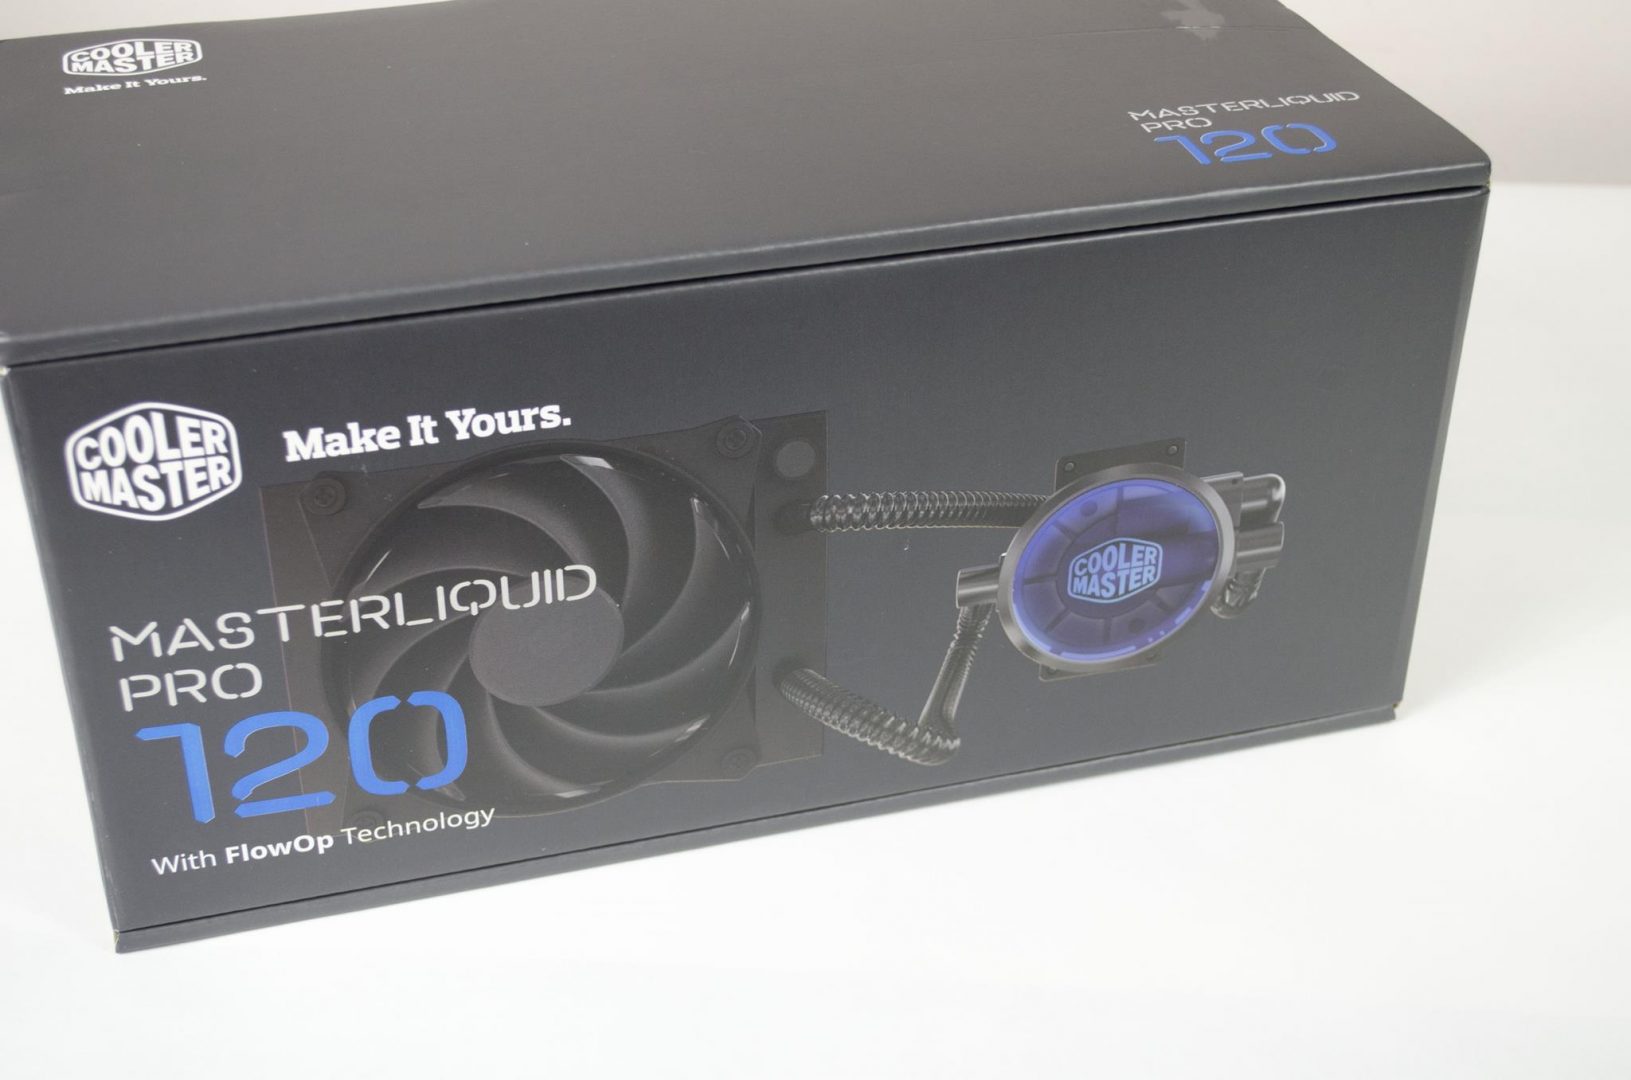 cooler-master-masterliuqid-pro-120